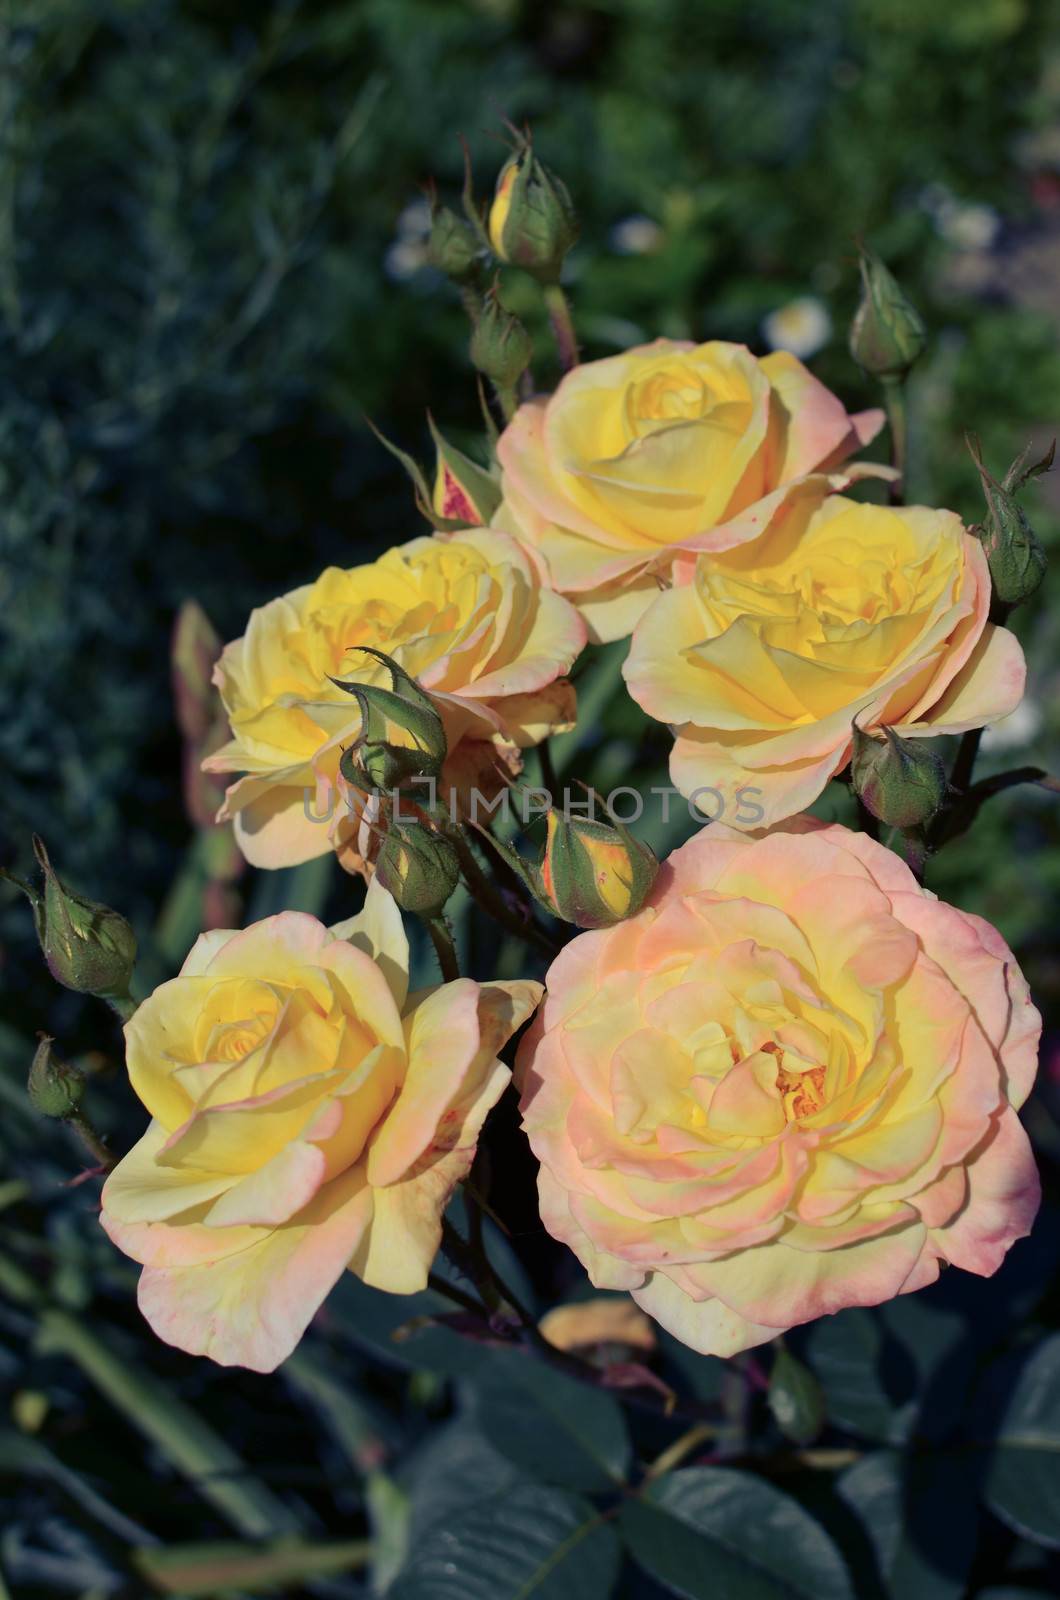 Orange yellow roses in the garden by kimbo-bo